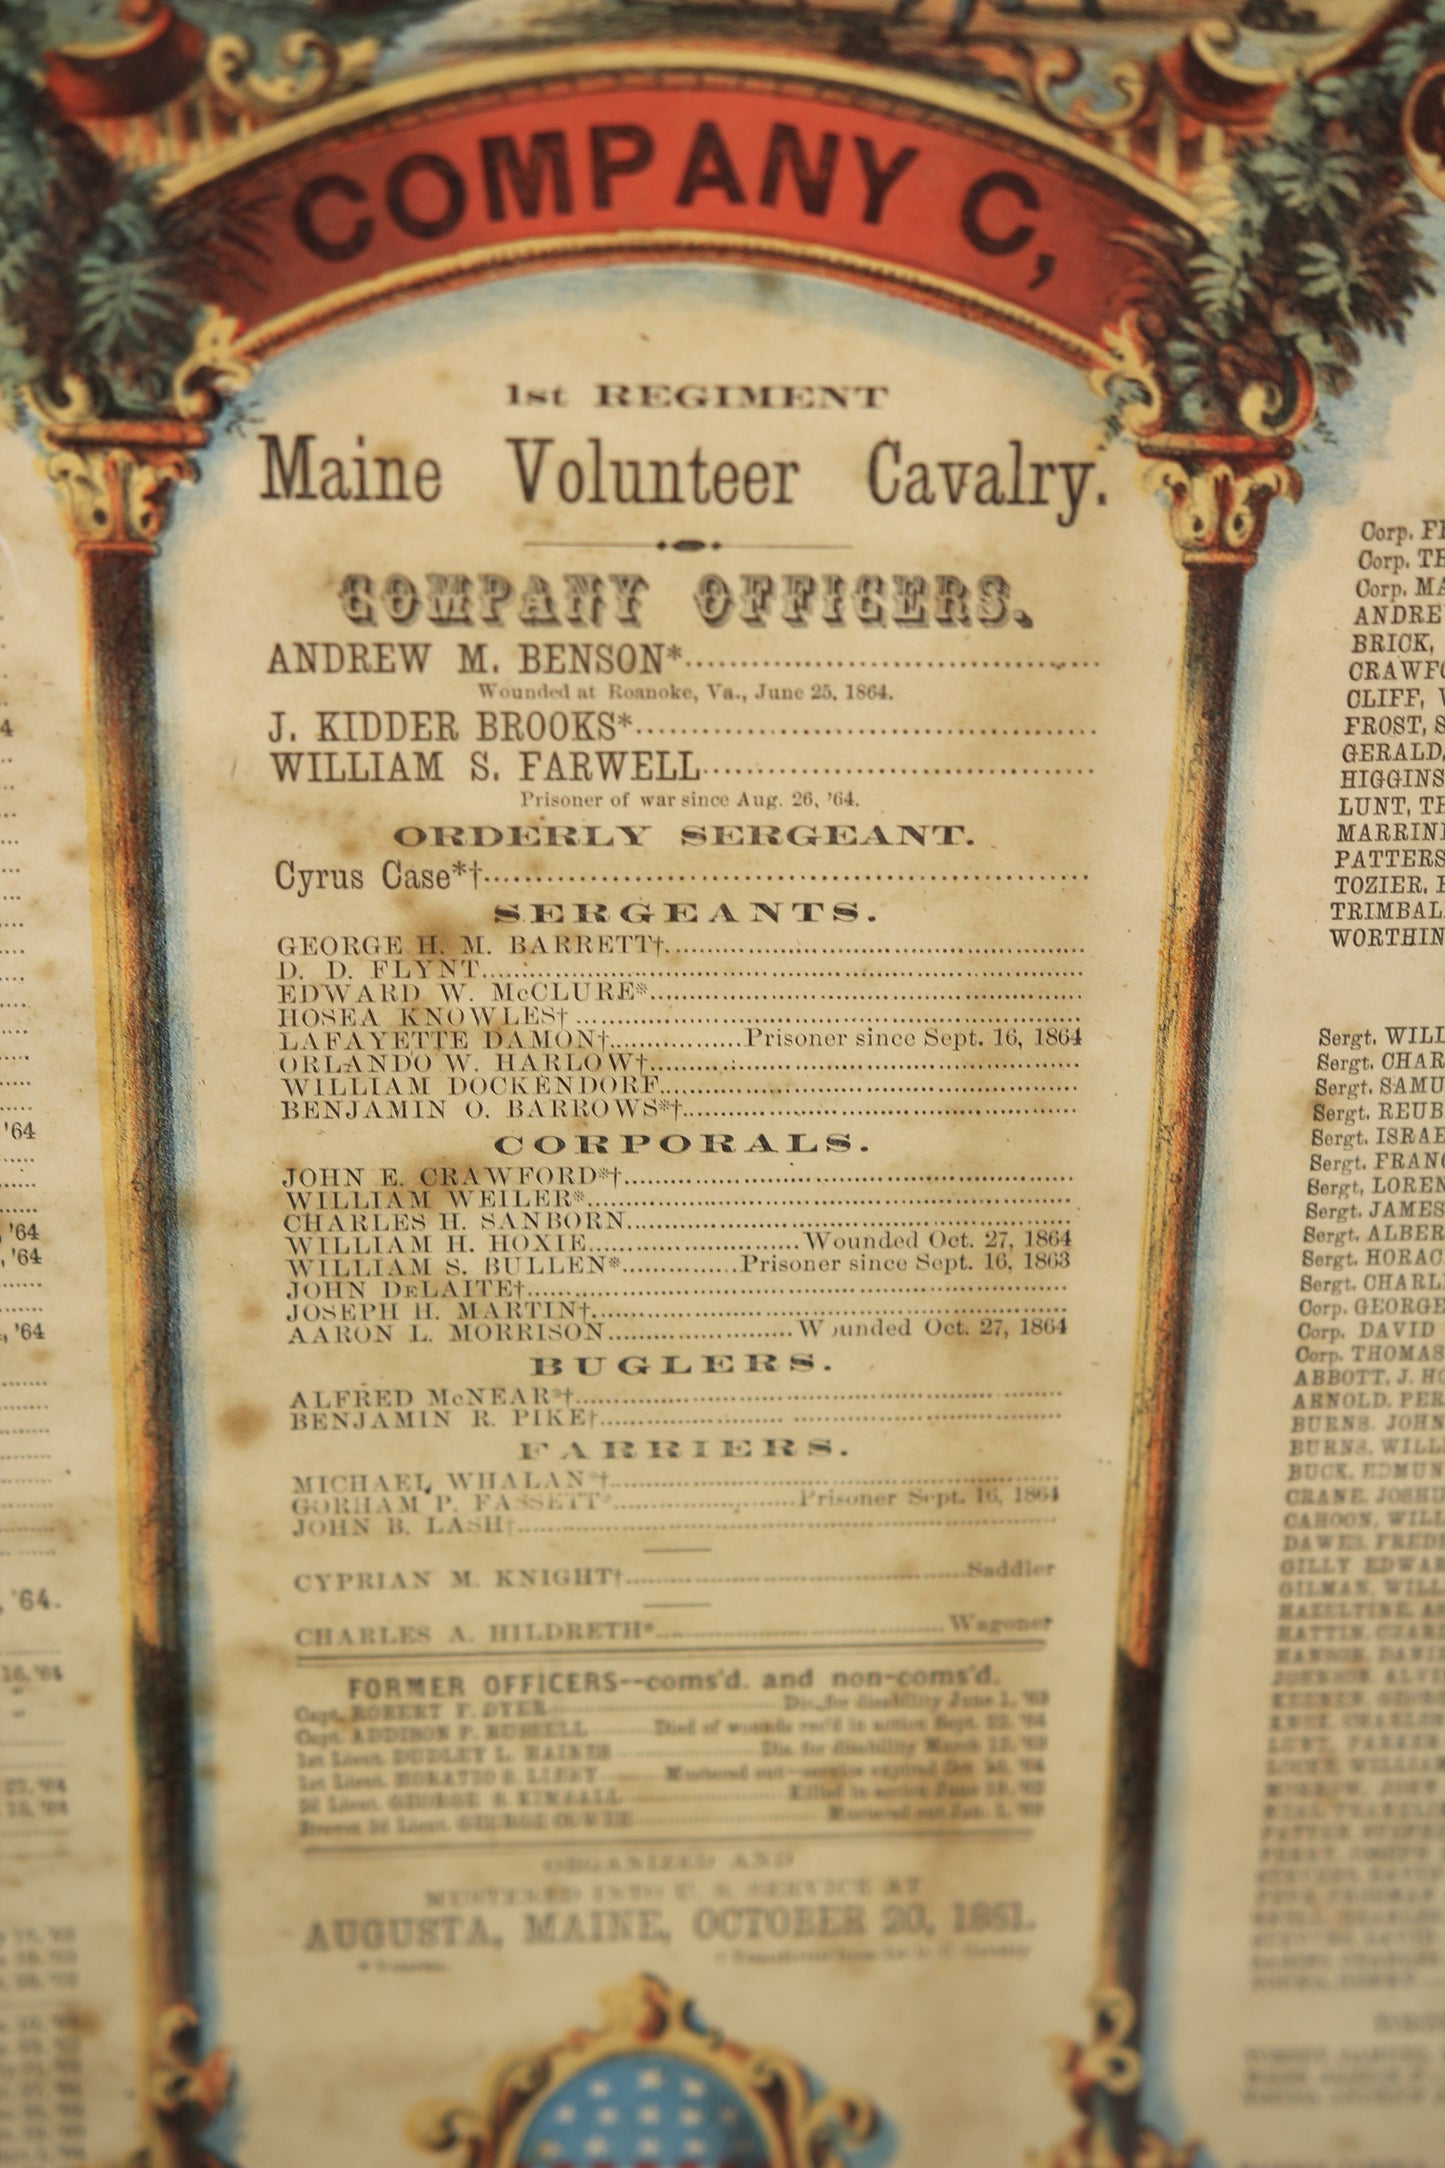 Civil War Military Register Lithograph - Company C, 1st Regiment Maine Volunteer Cavalry - 21.5" x 25.5"